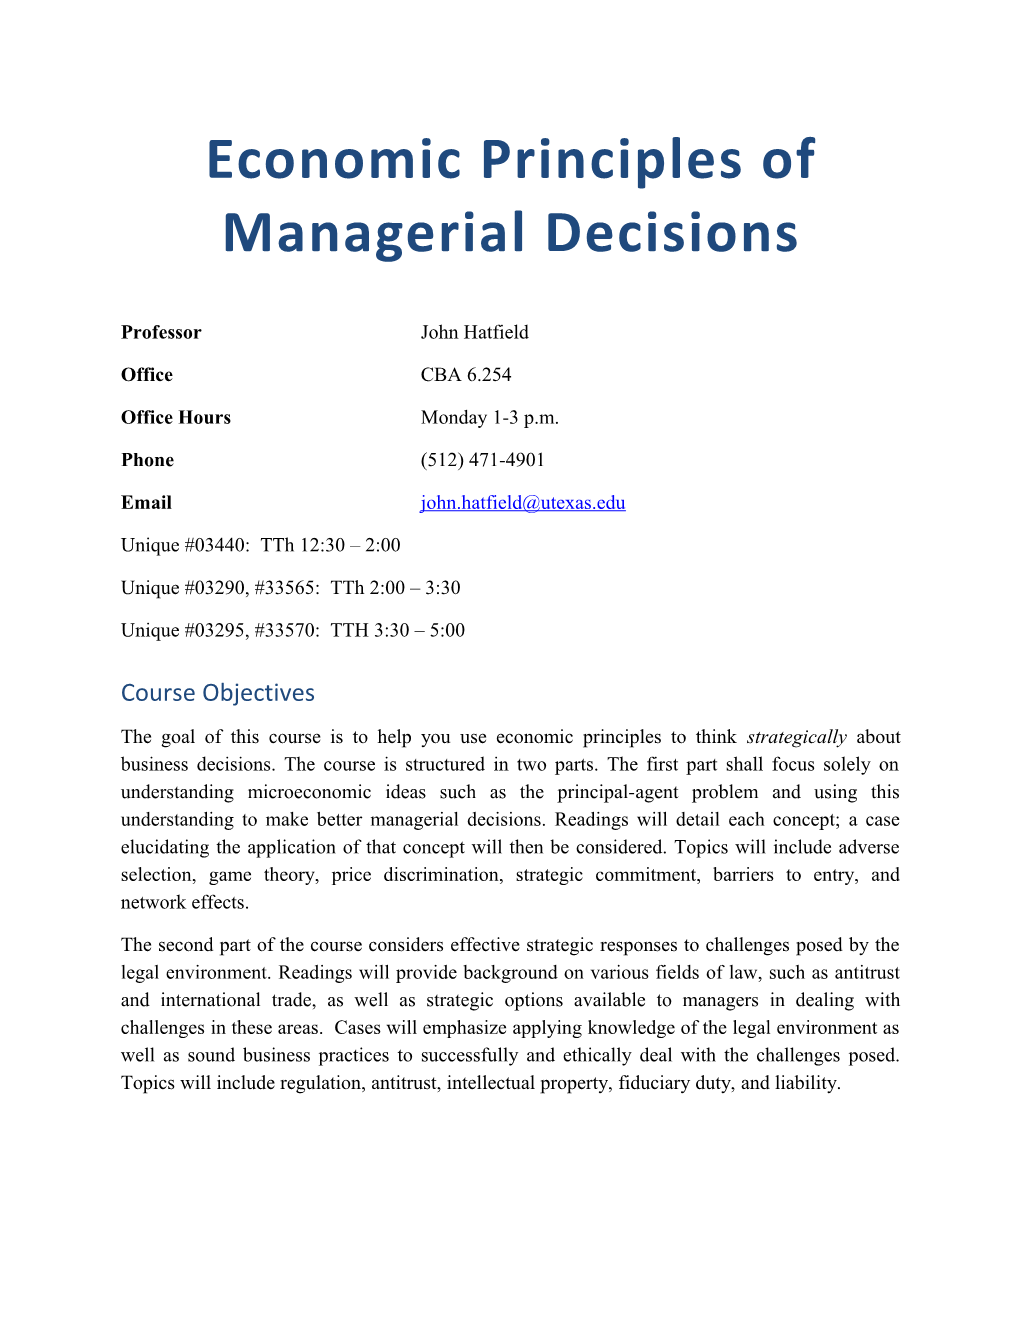 Economic Principles of Managerial Decisions